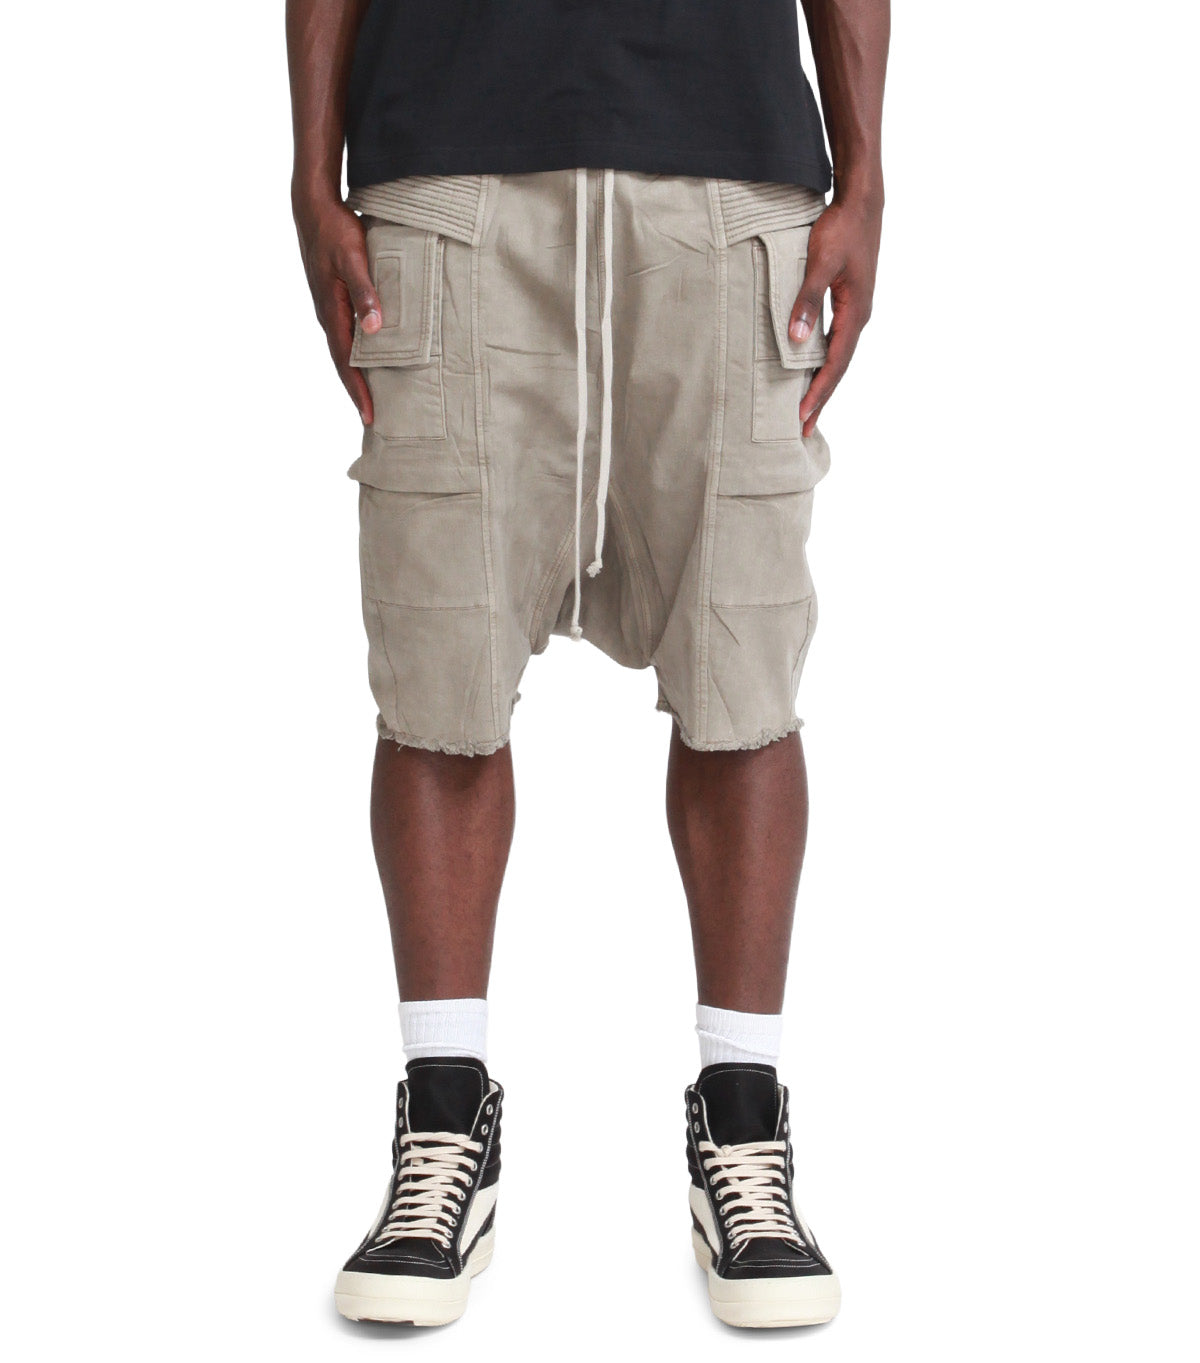 Rick Owens drop-crotch cargo shorts - Red